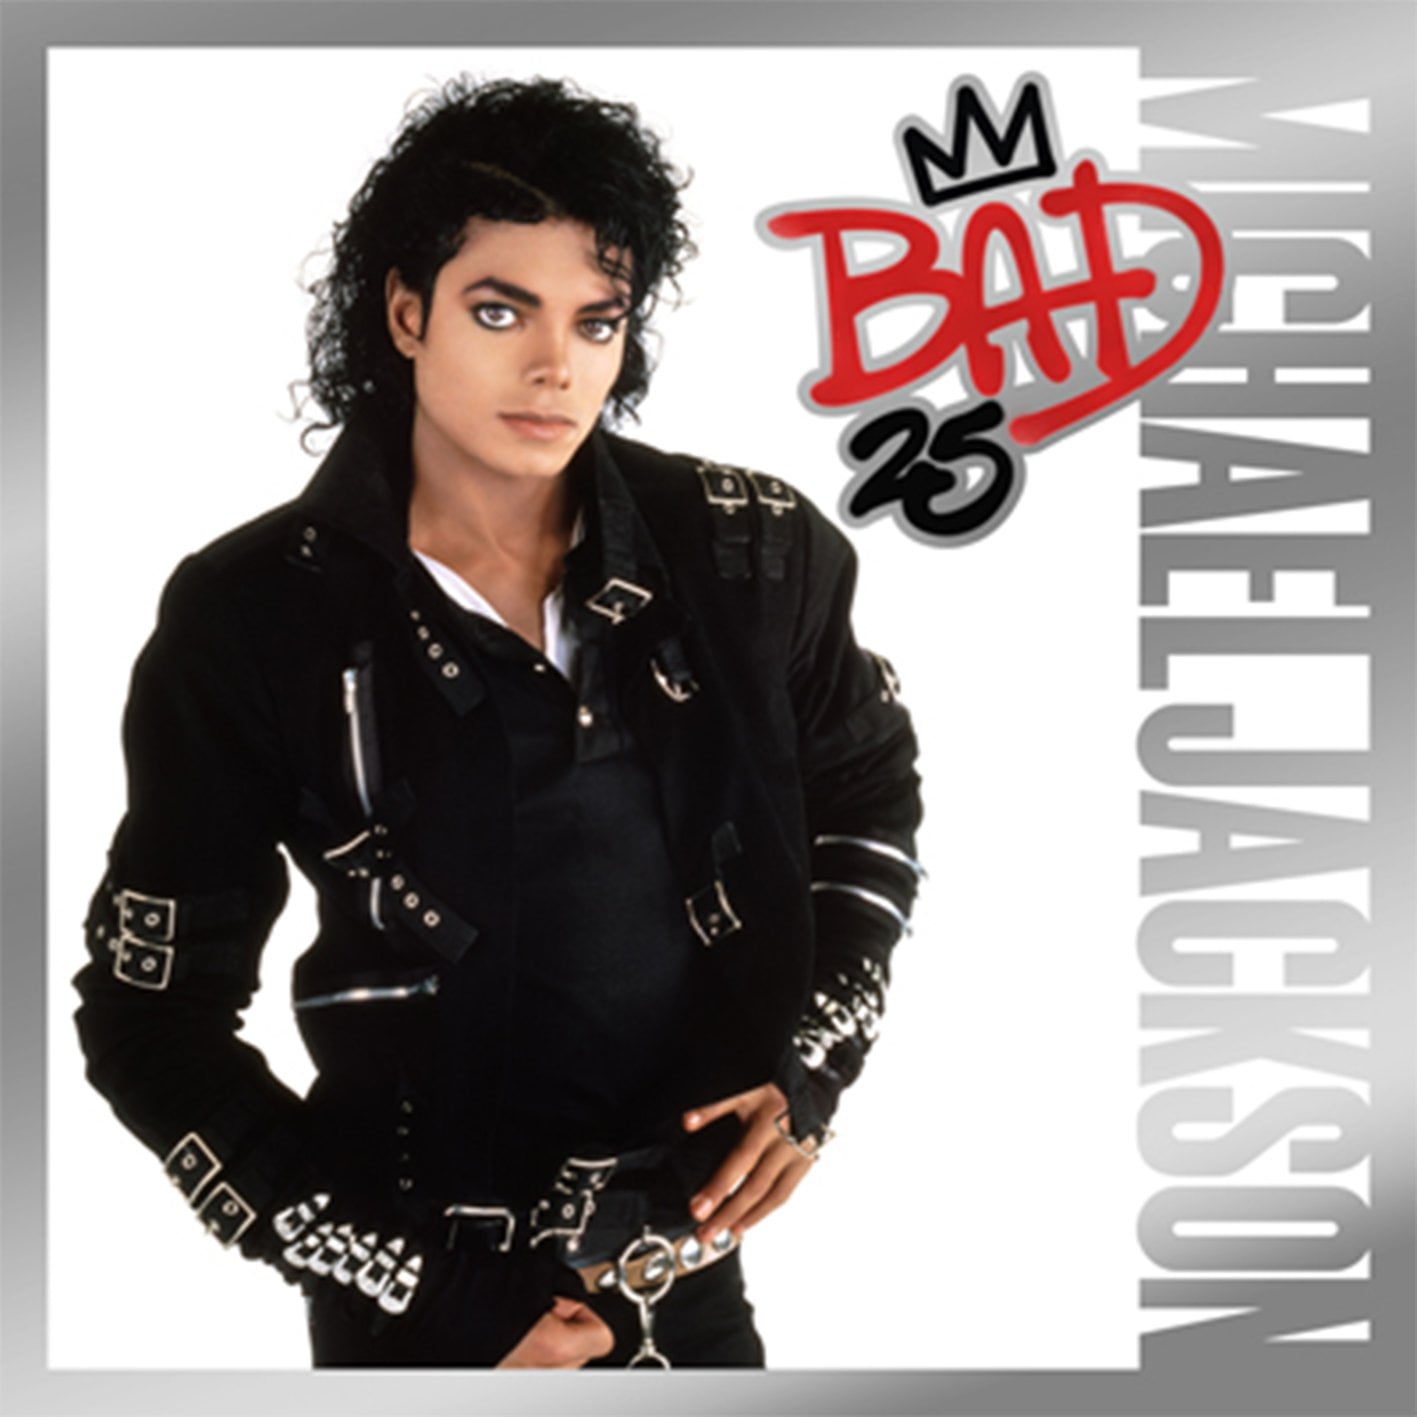 Michael Jackson's Thriller in 3D 2 13" x 20" Movie Poster 